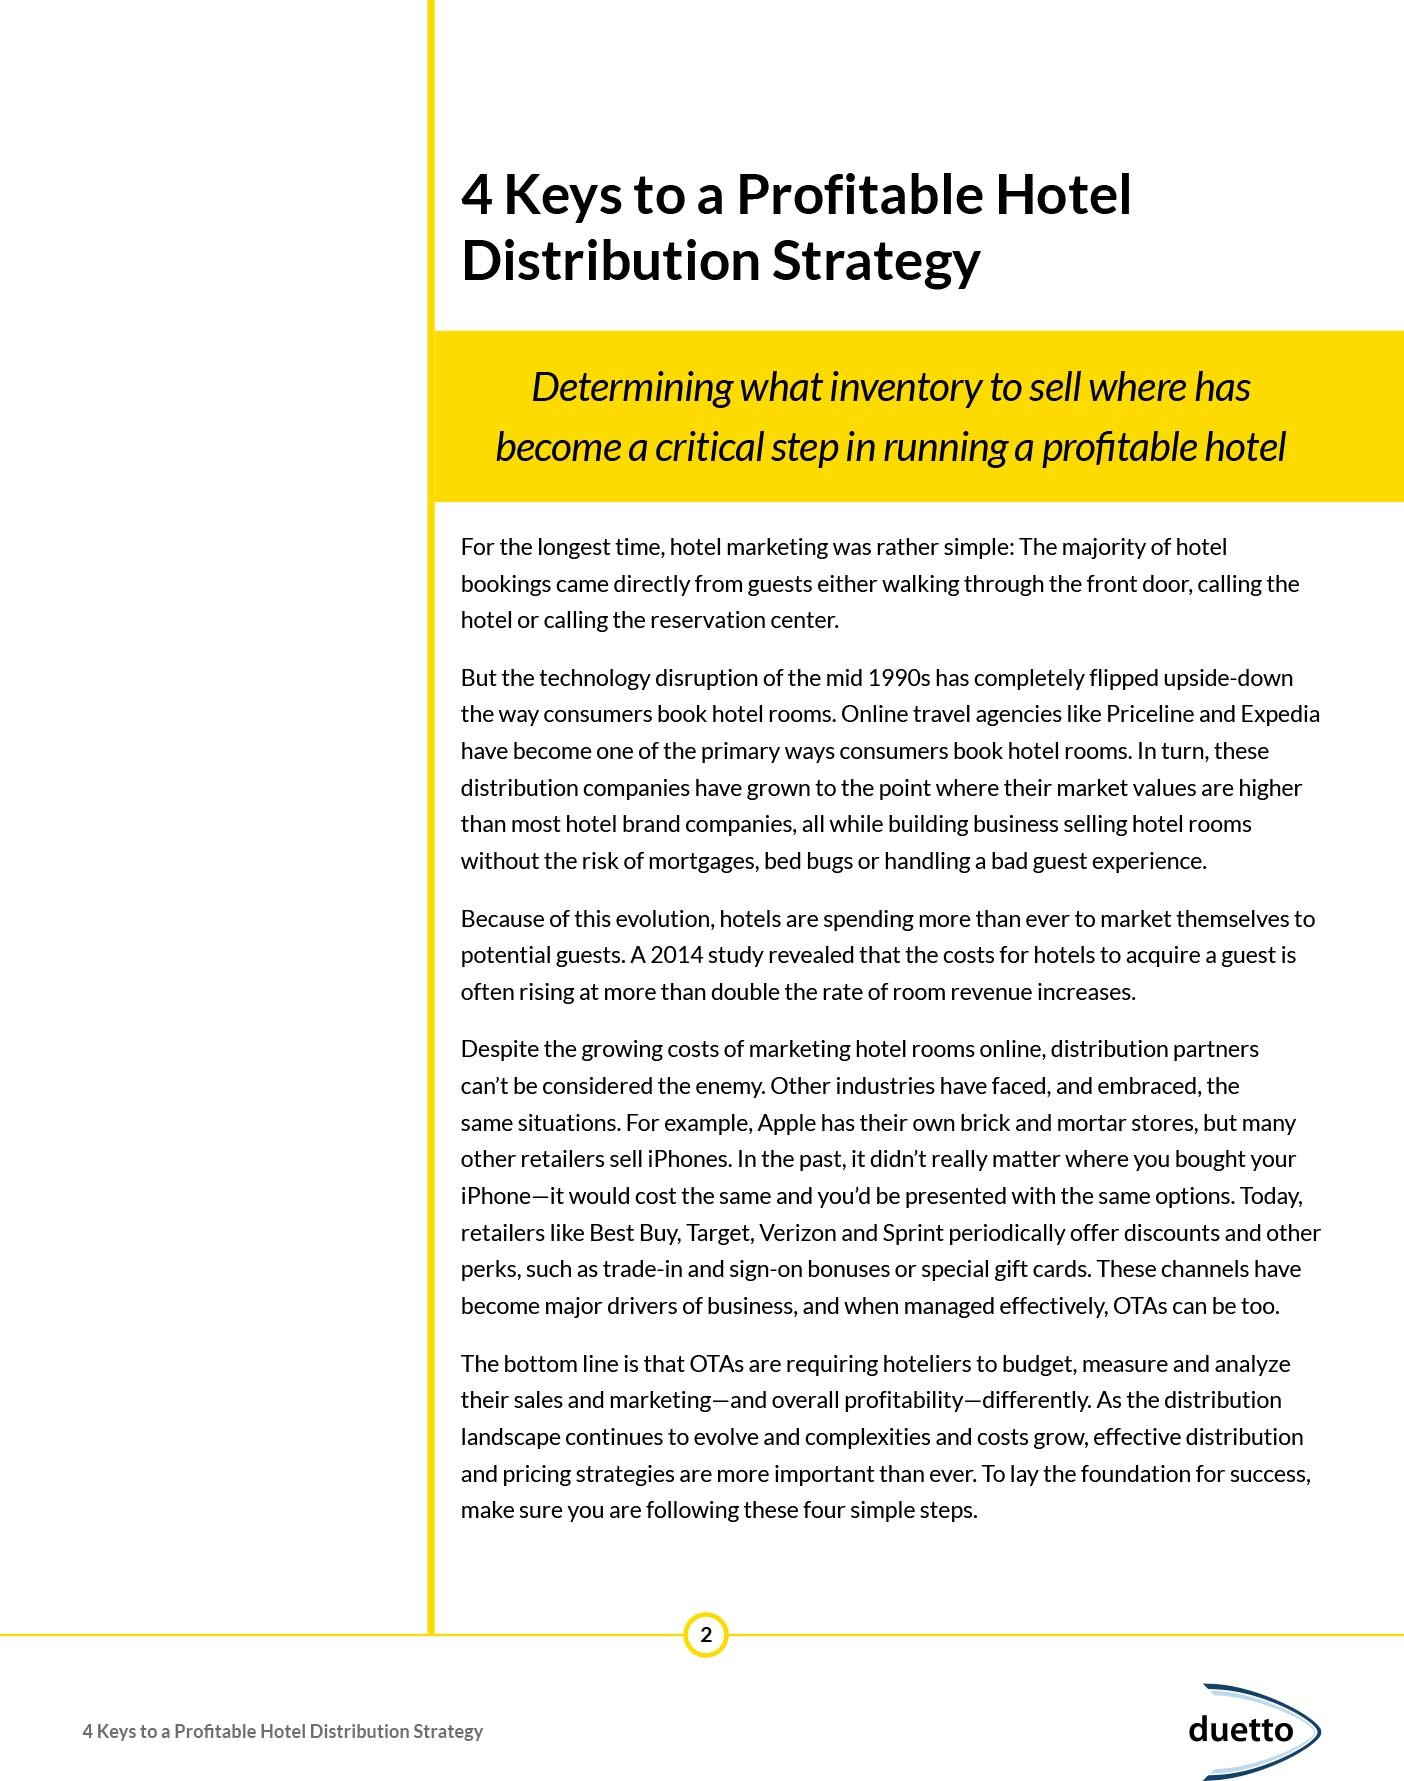 2 4-keys-to-a-profitable-hotel-distribution-strategy-2.jpg